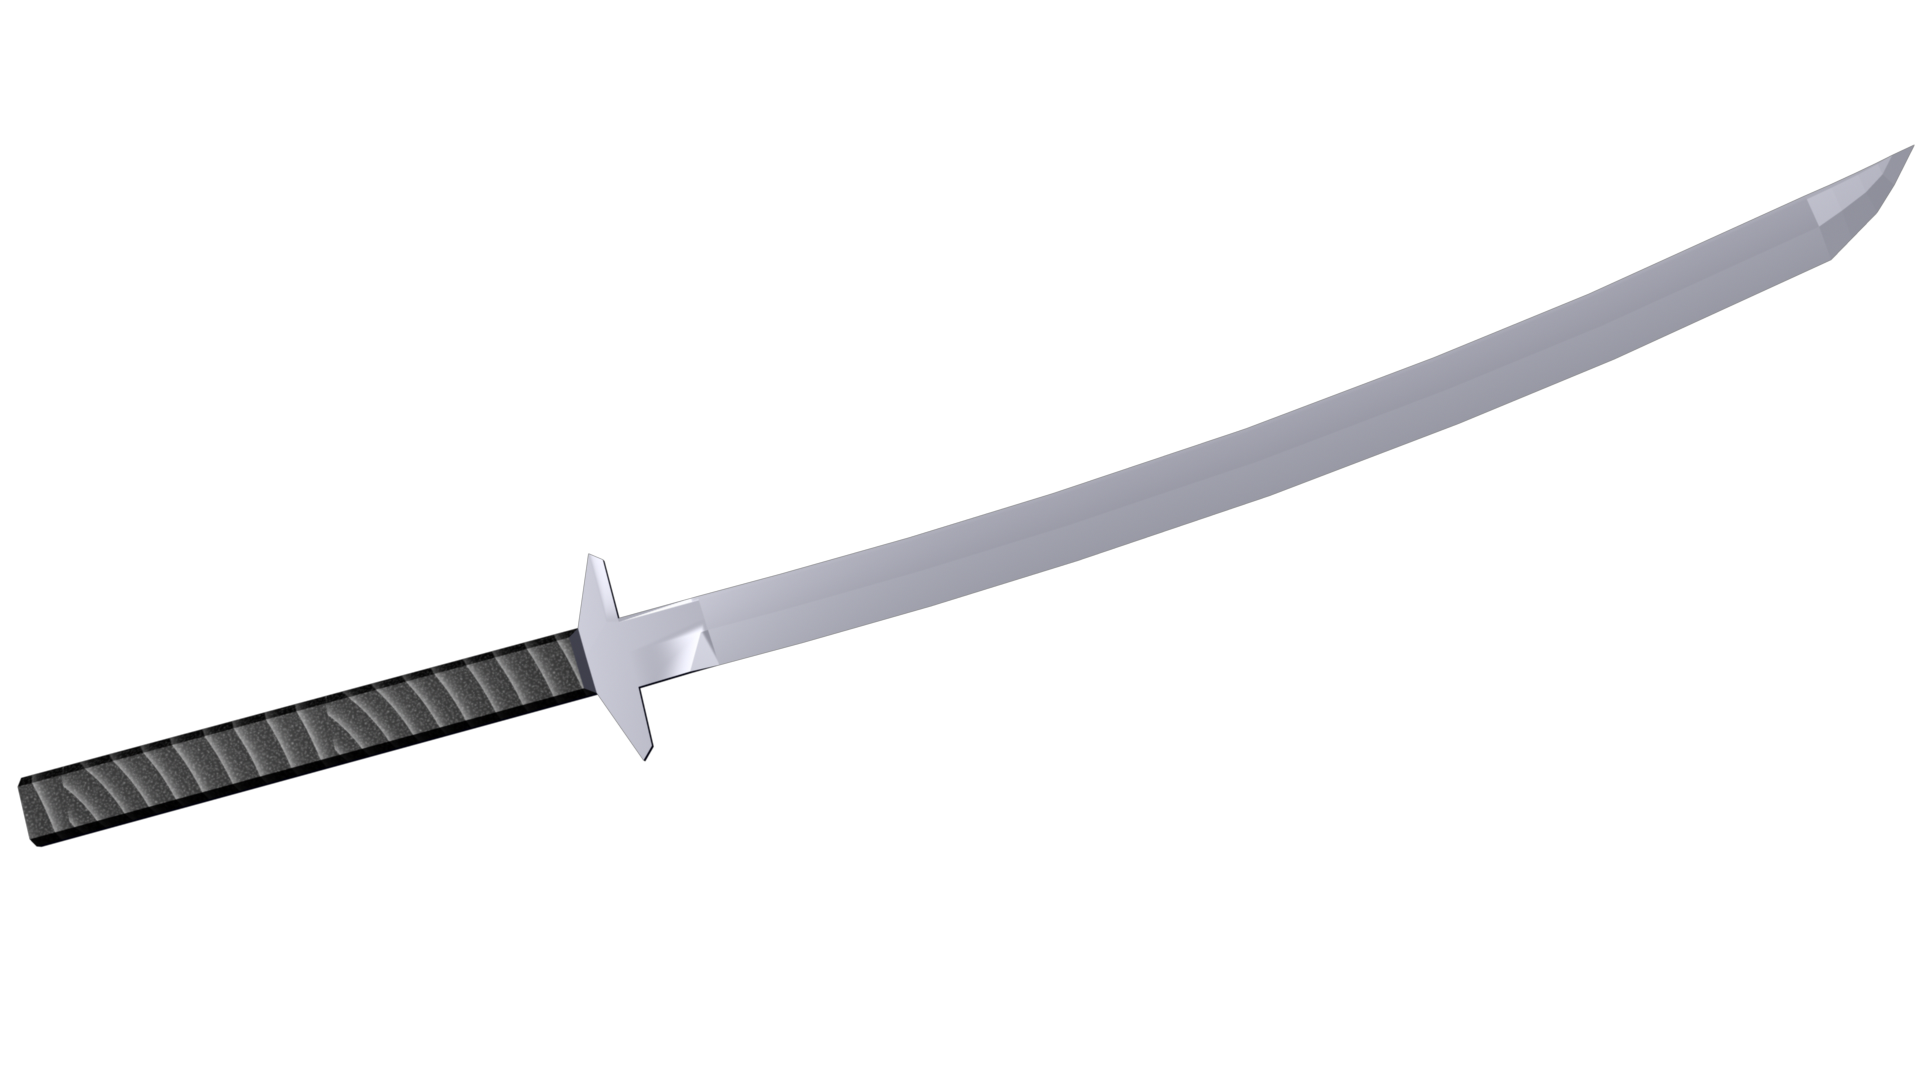 Espada de samurai